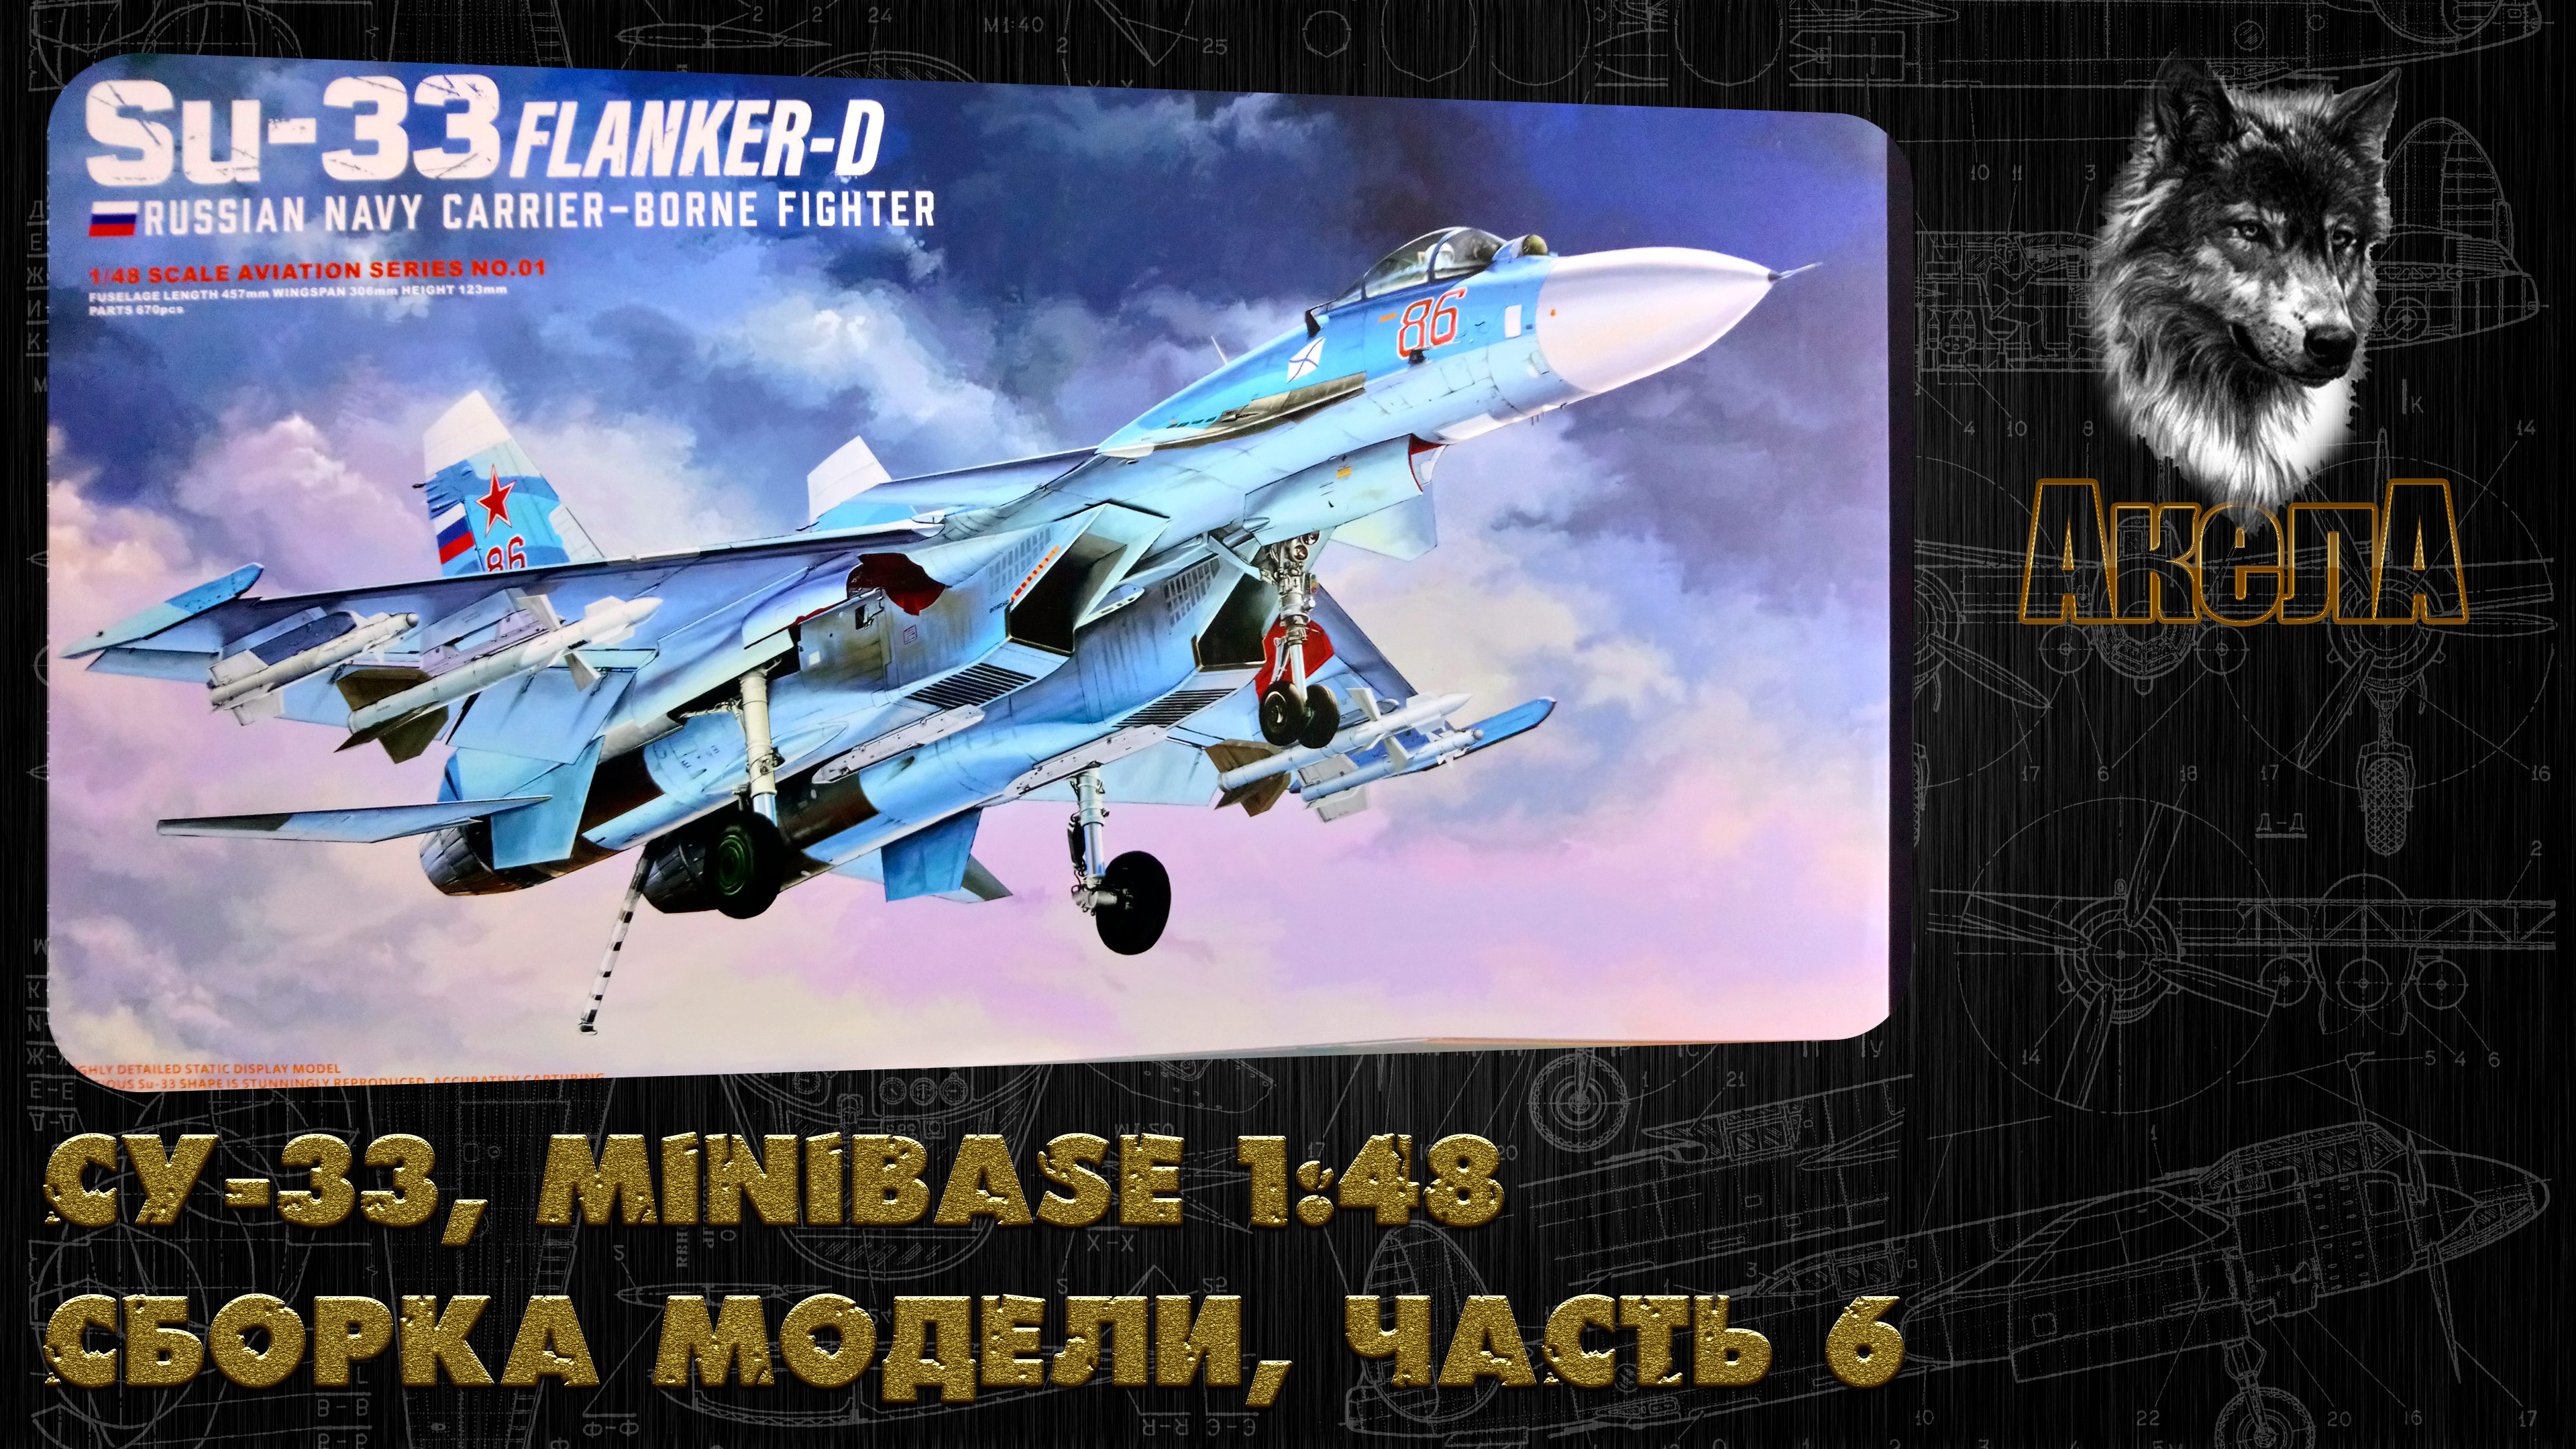 Су-33, Minibase 1/48, сборка модели, часть 6